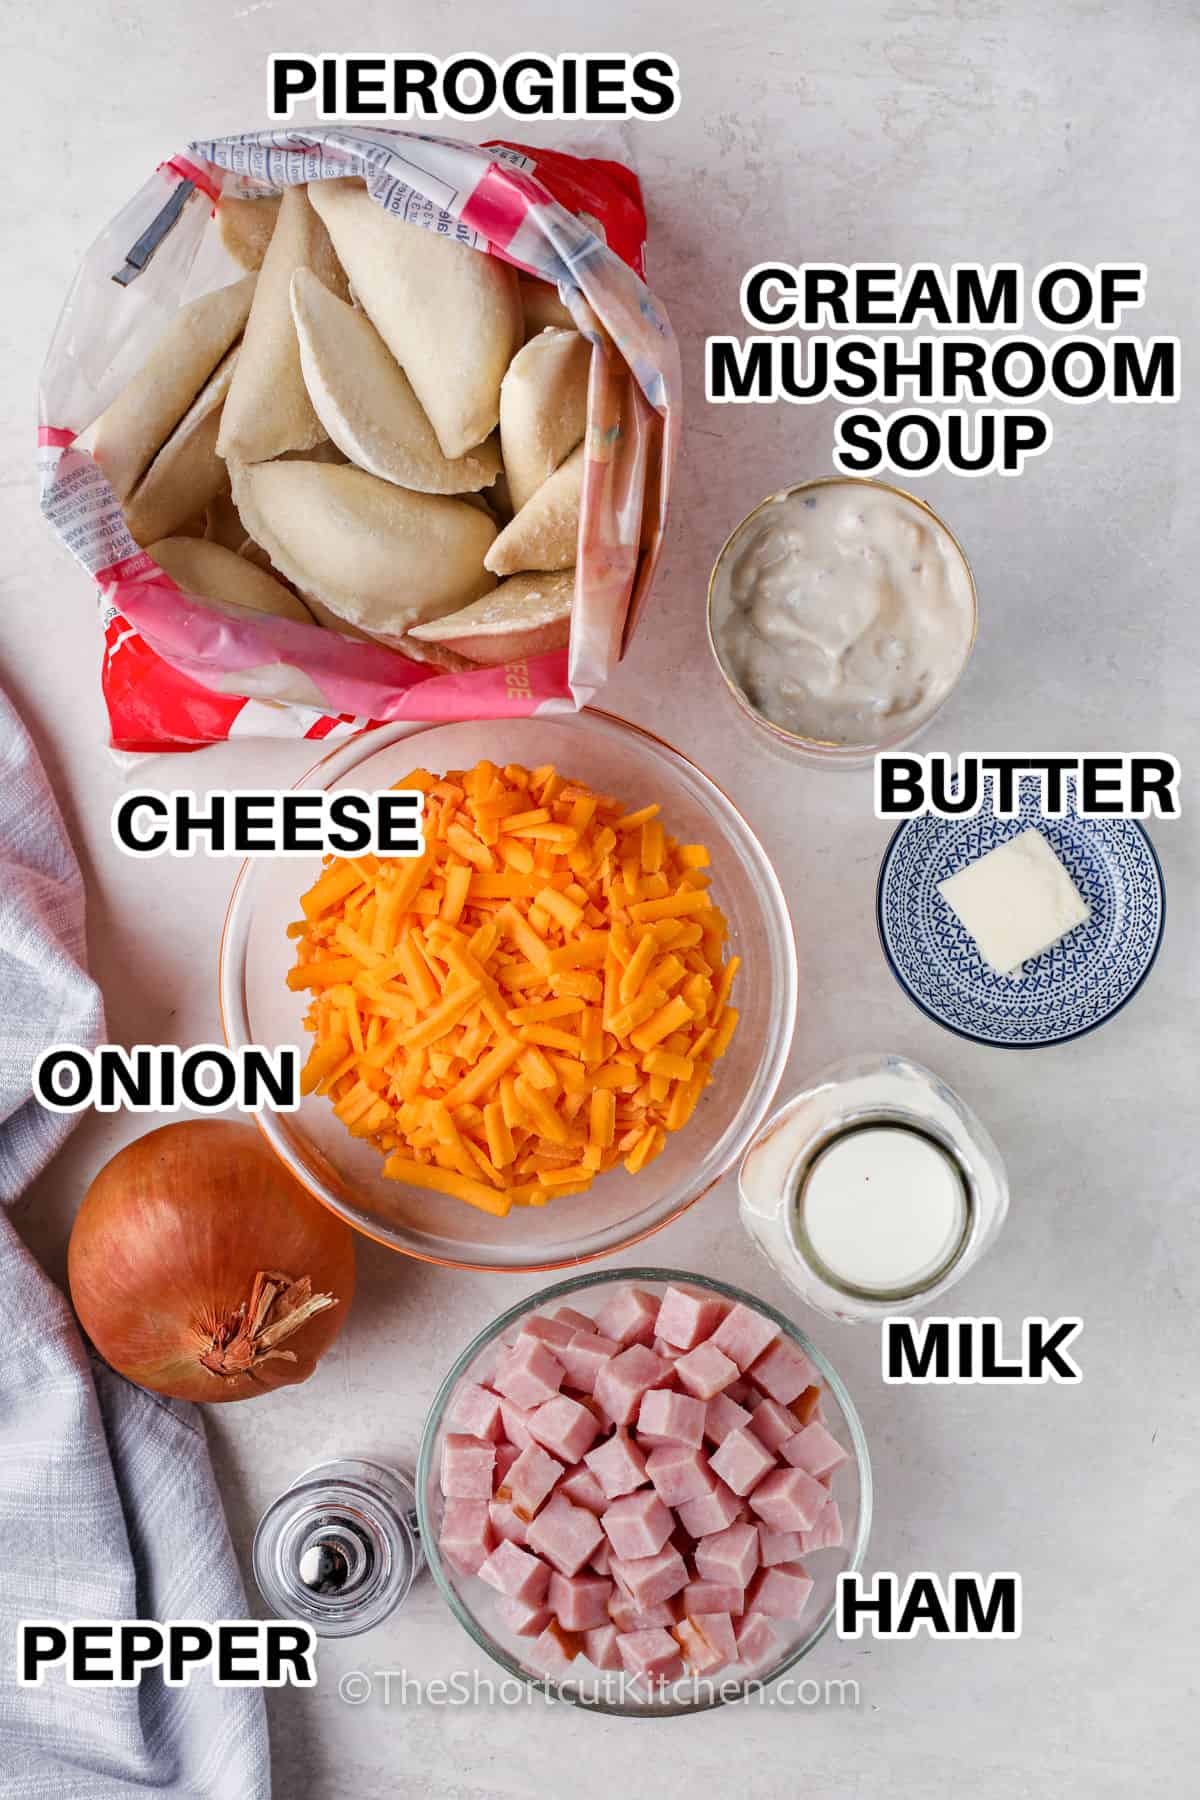 ingredients to make pierogi casserole labeled